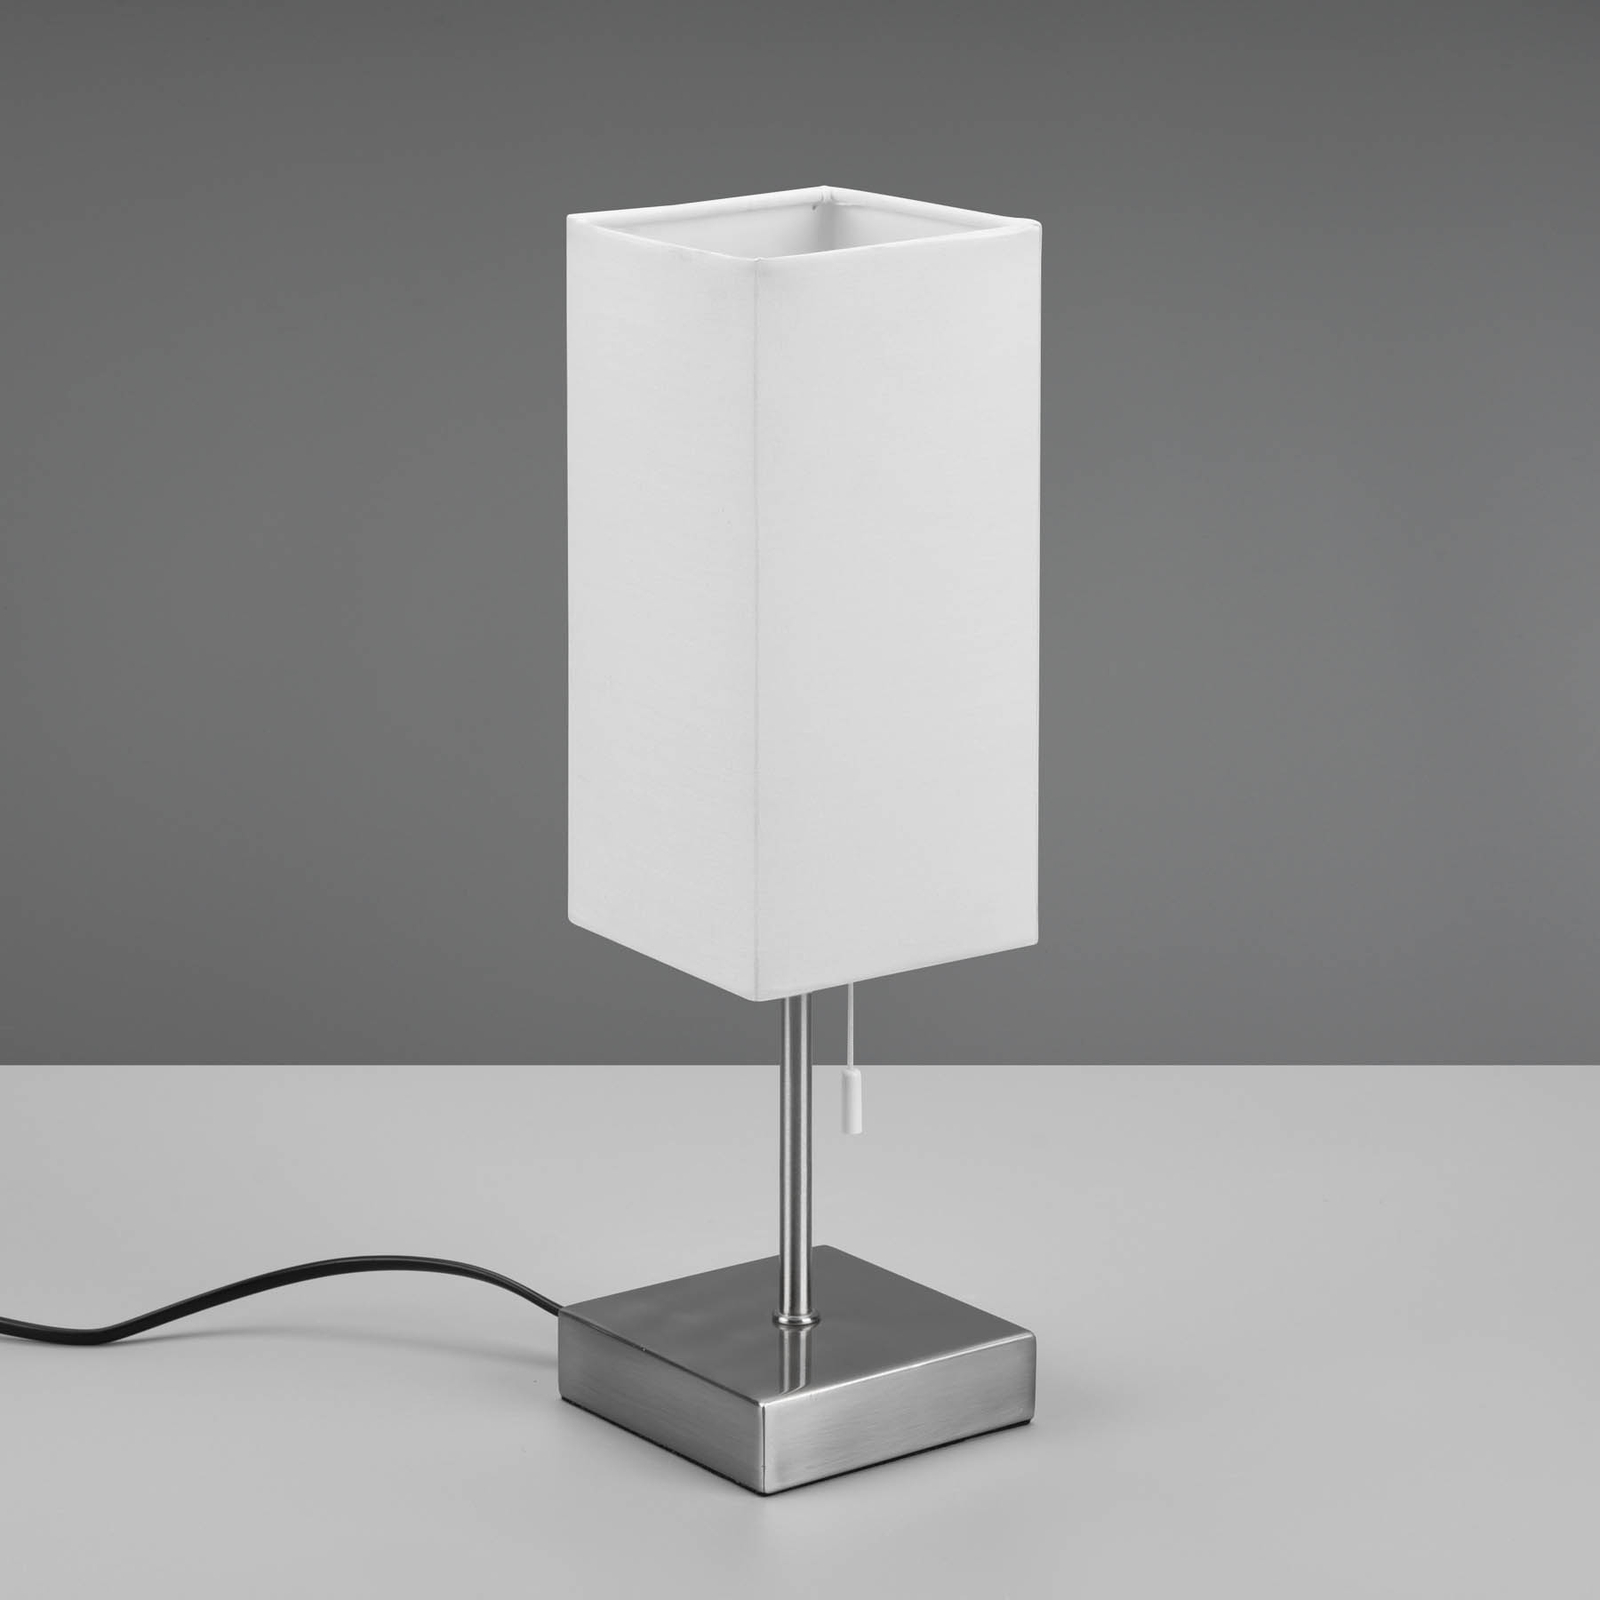 Tafellamp Ole met USB-aansluiting, wit/nikkel